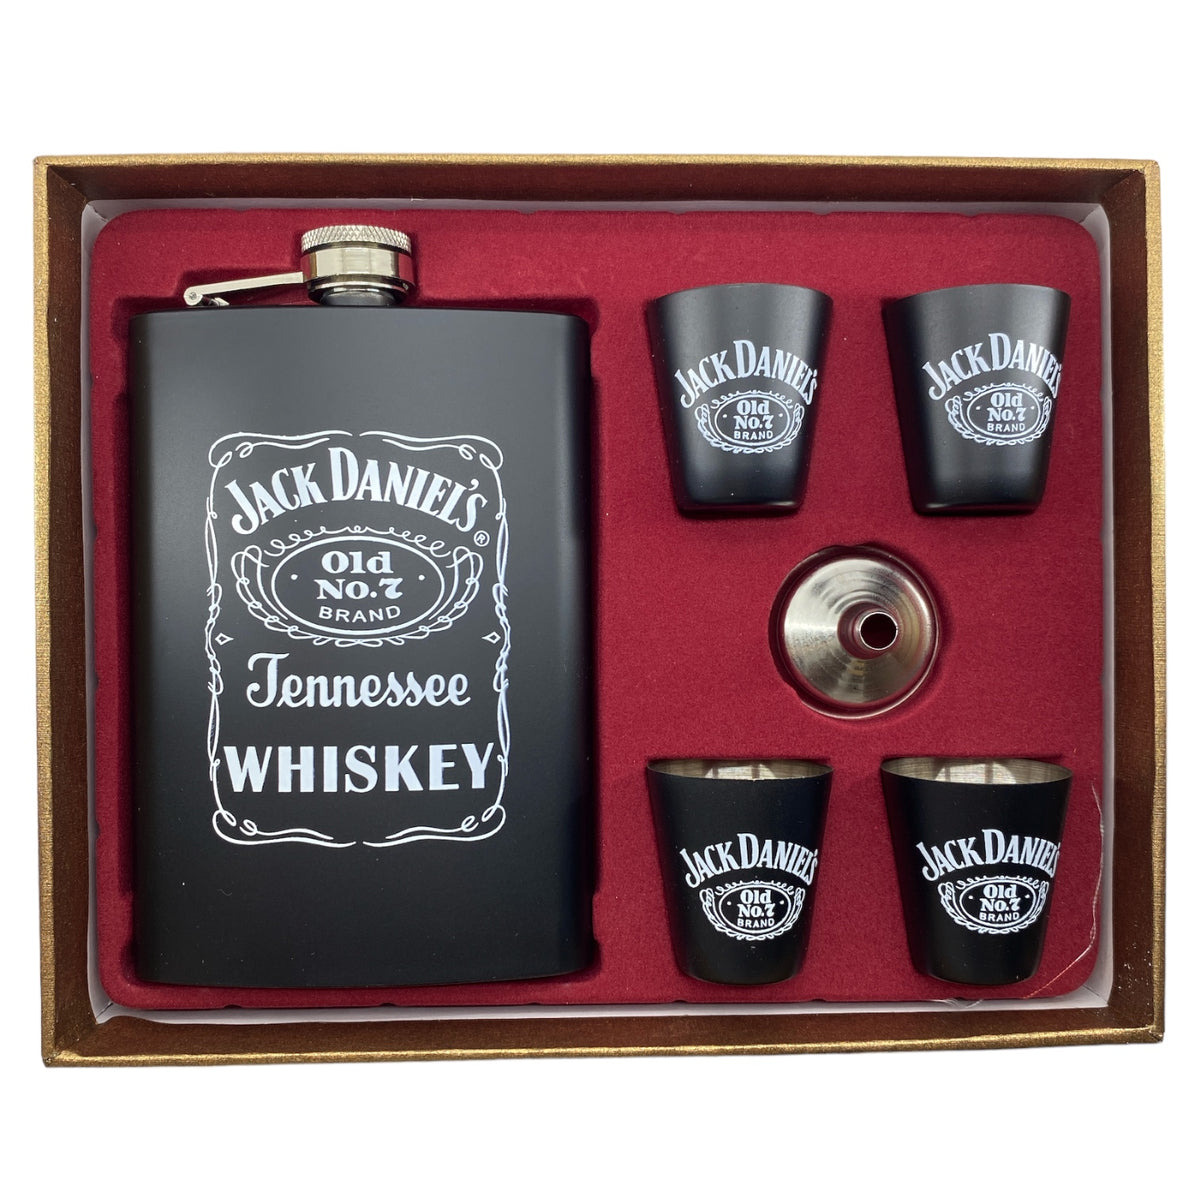 Whiskera Jack Daniel's negra + 4 copas + embudo VIC-81